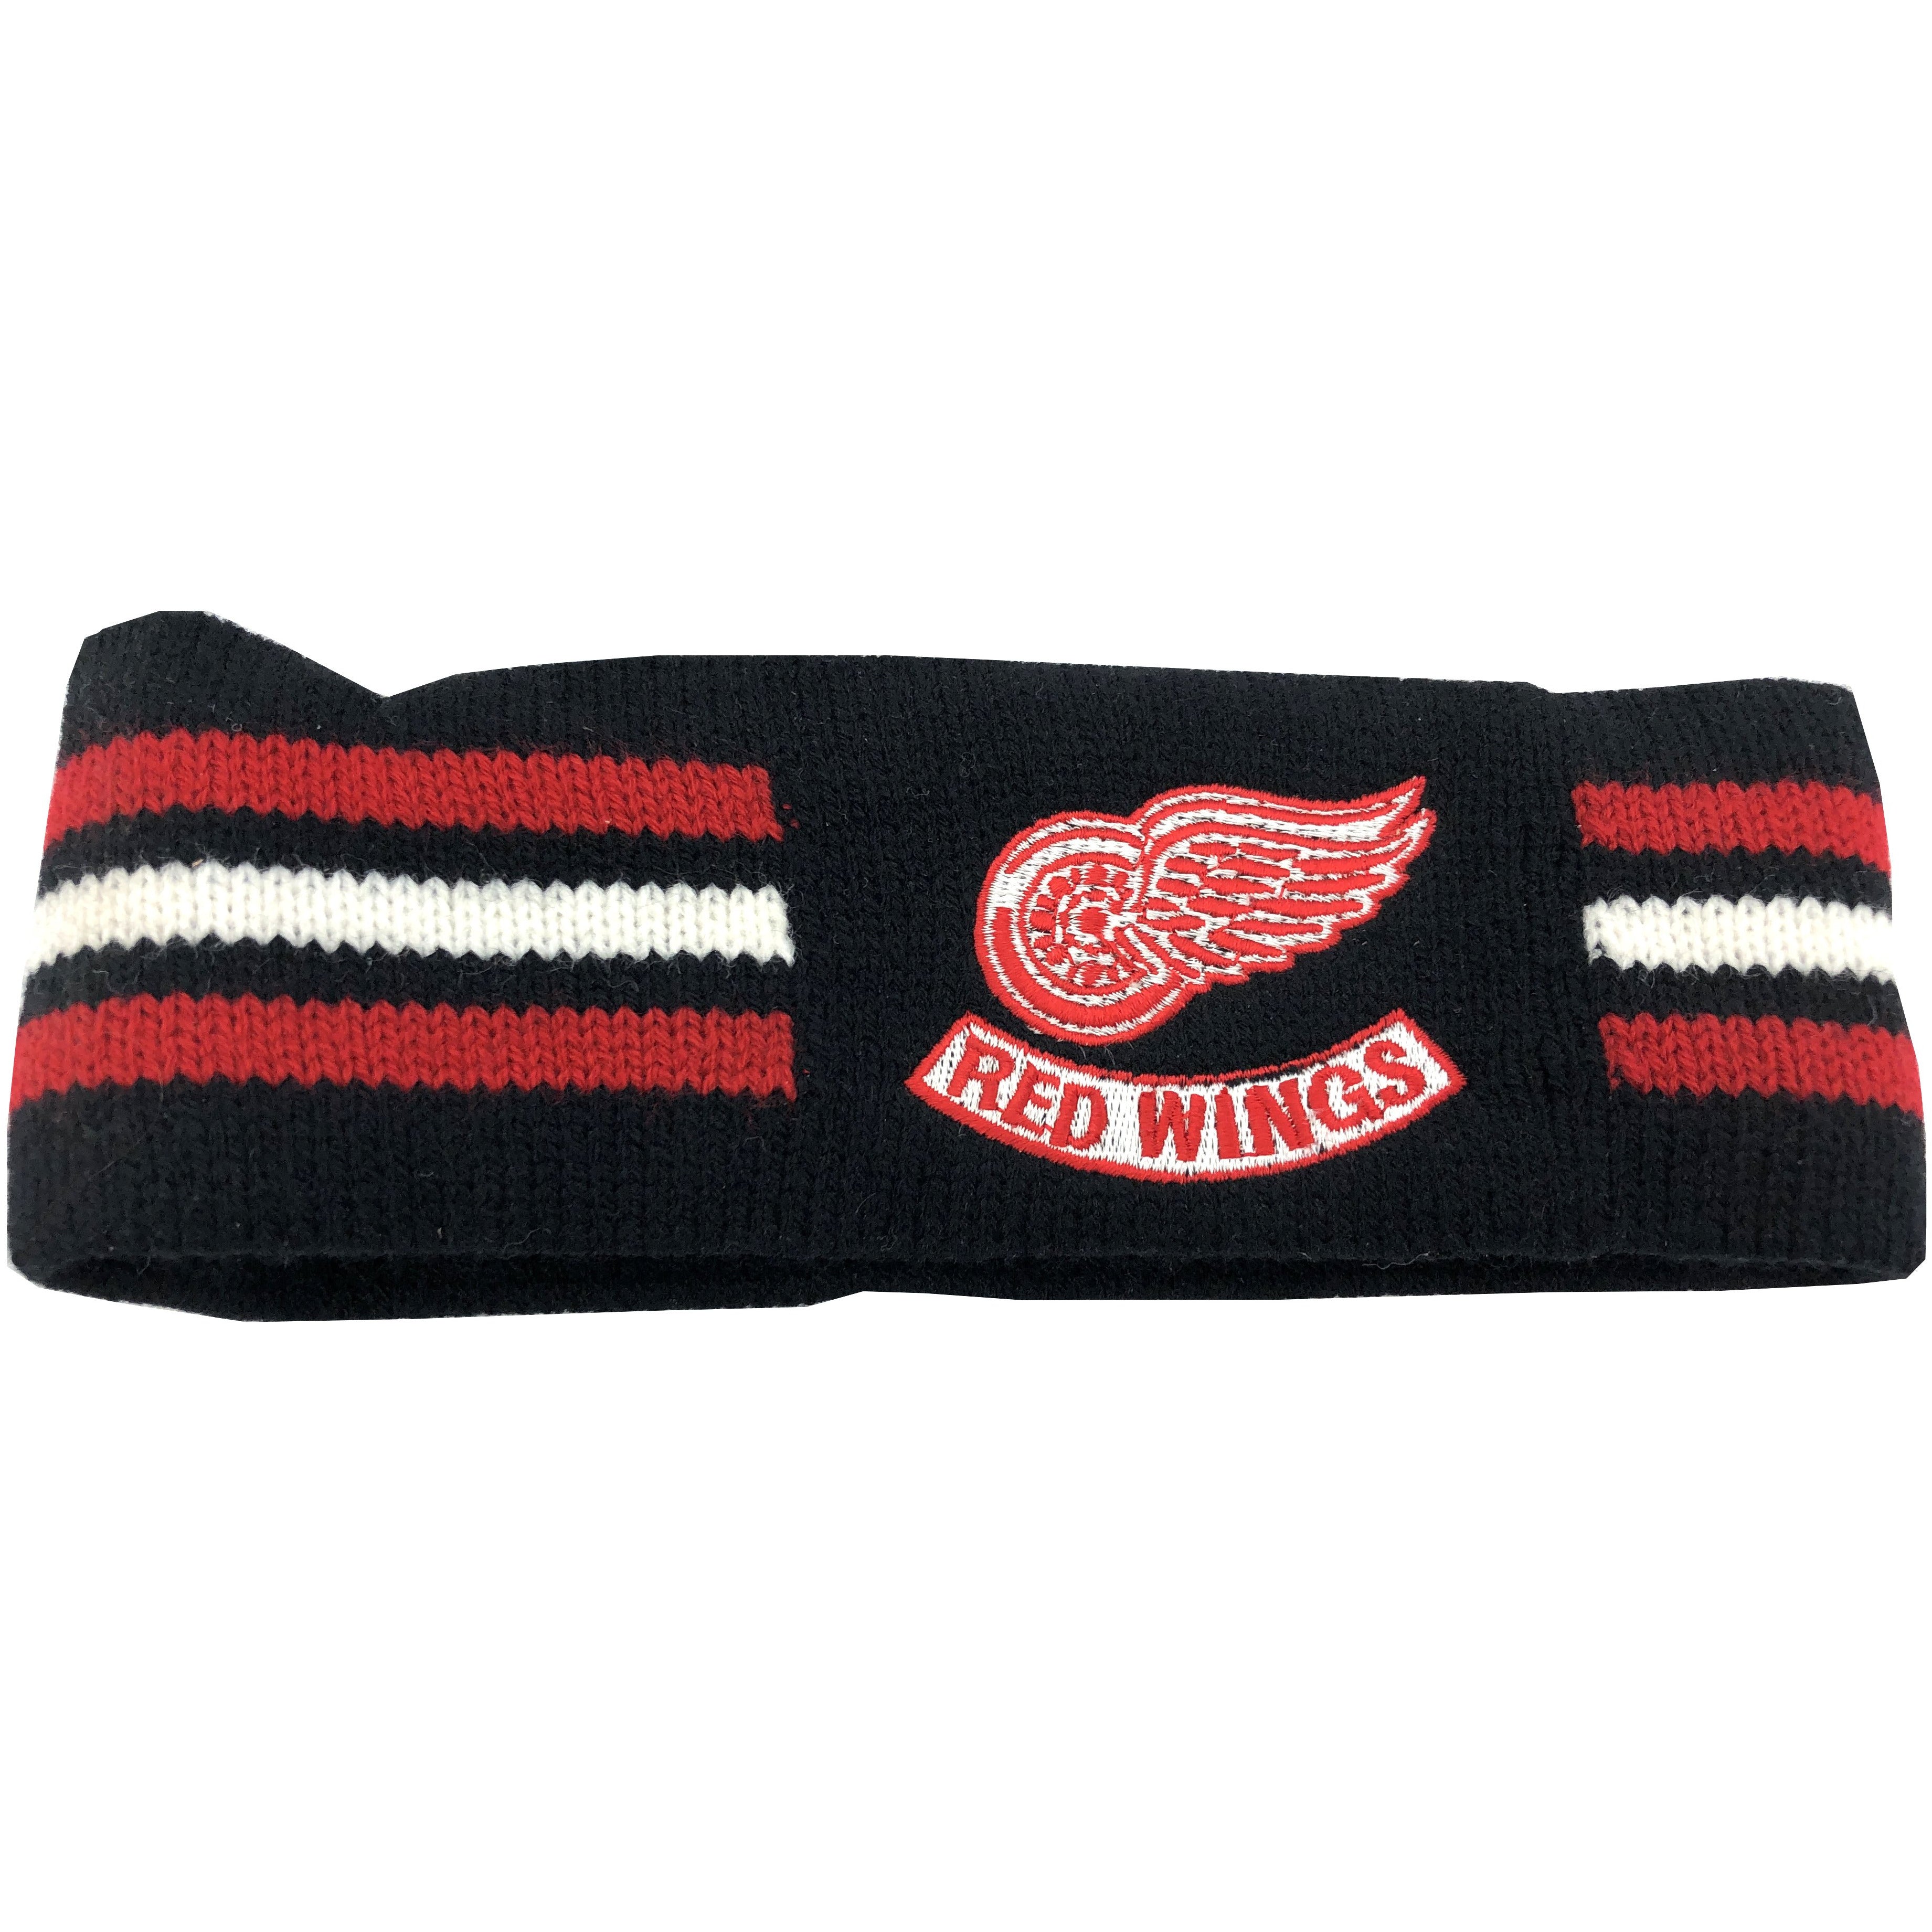 NHL Kid's Winter Headbands / Official NHL Gear / Outdoor Winter Gear / Size 4-14